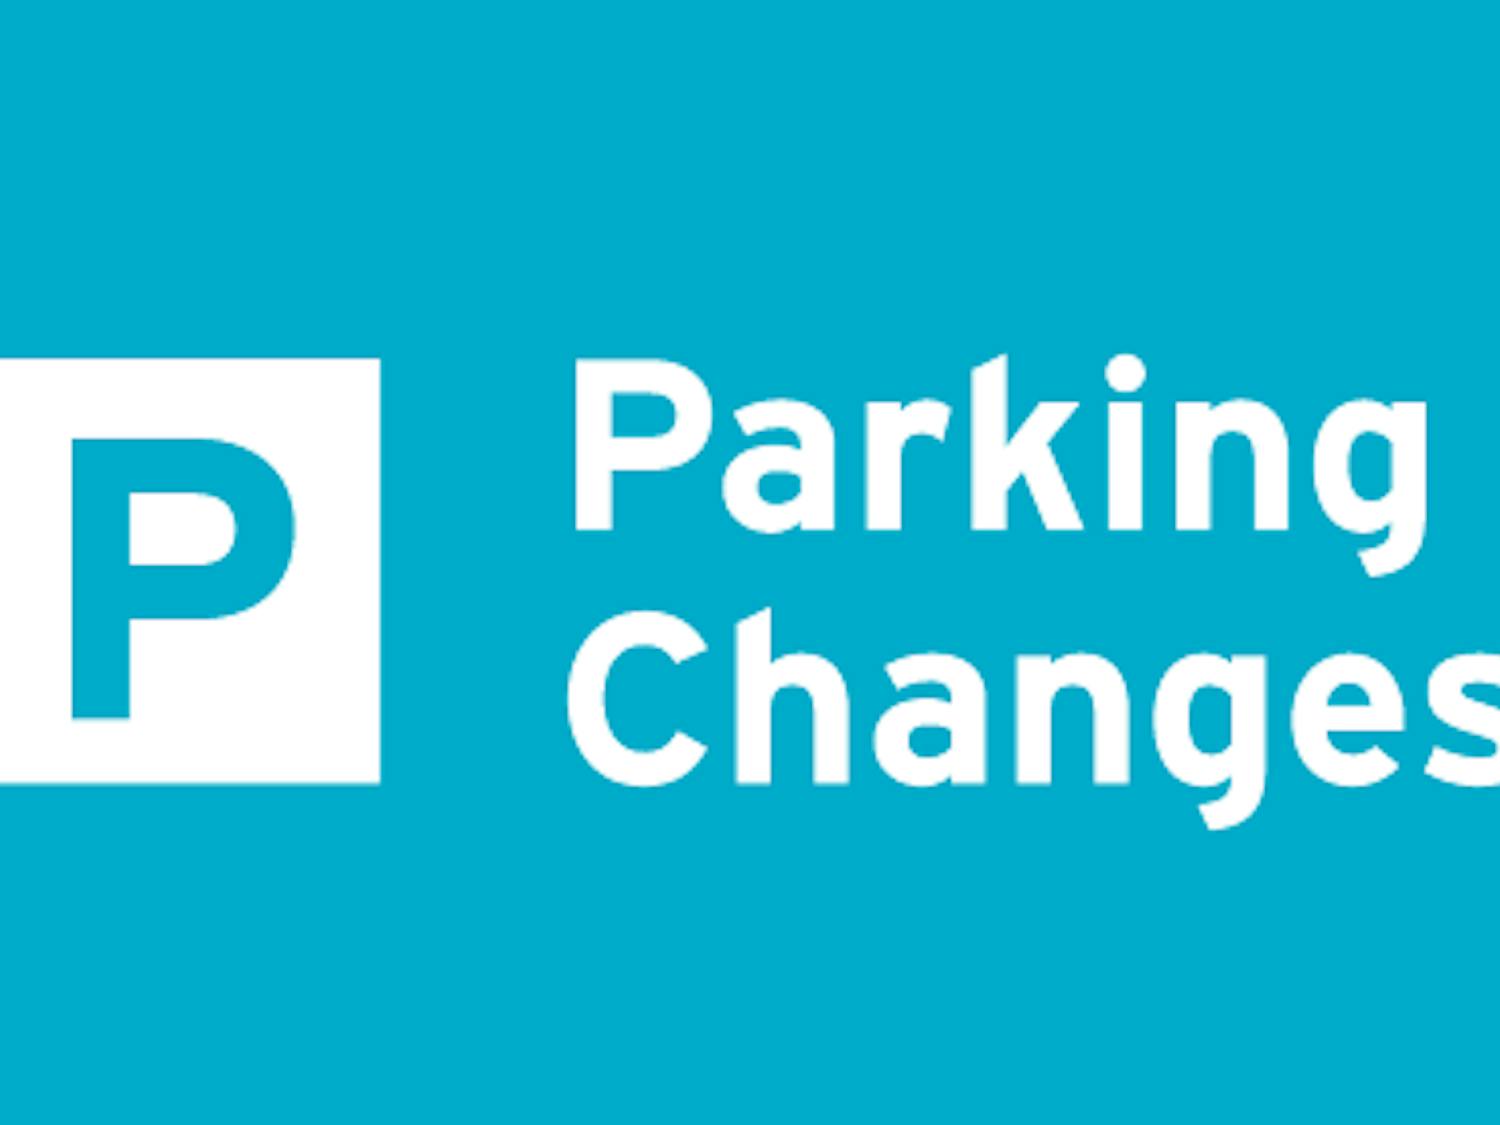 Parking changes sign